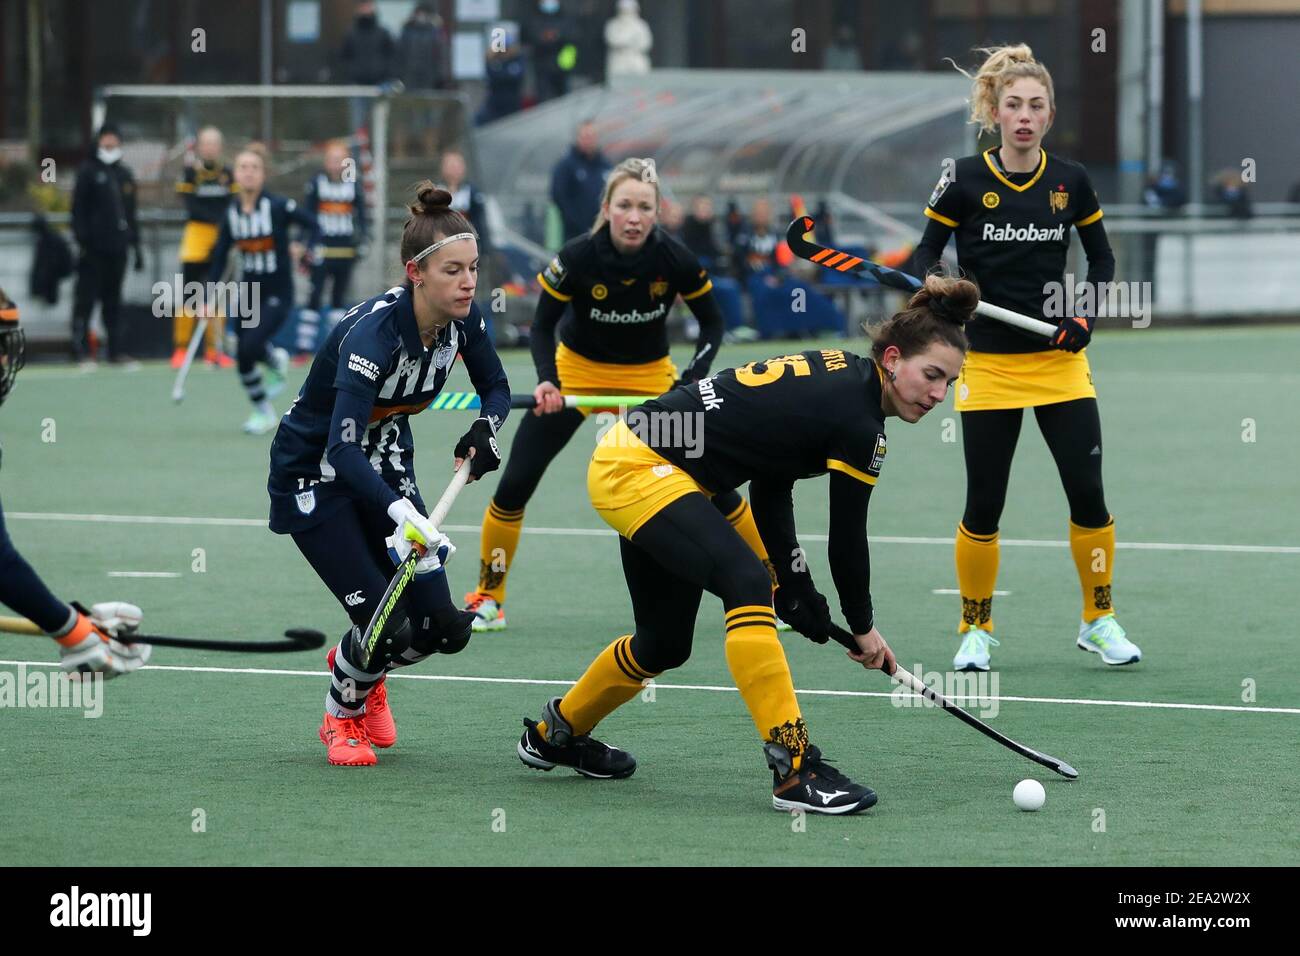 DEN HAAG, NETHERLANDS - FEBRUARY 6: Marieke de Haas of HDM, Frederique  Matla of Den Bosch during the Dutch Hockey Women Hoofdklasse match between  HDM Stock Photo - Alamy